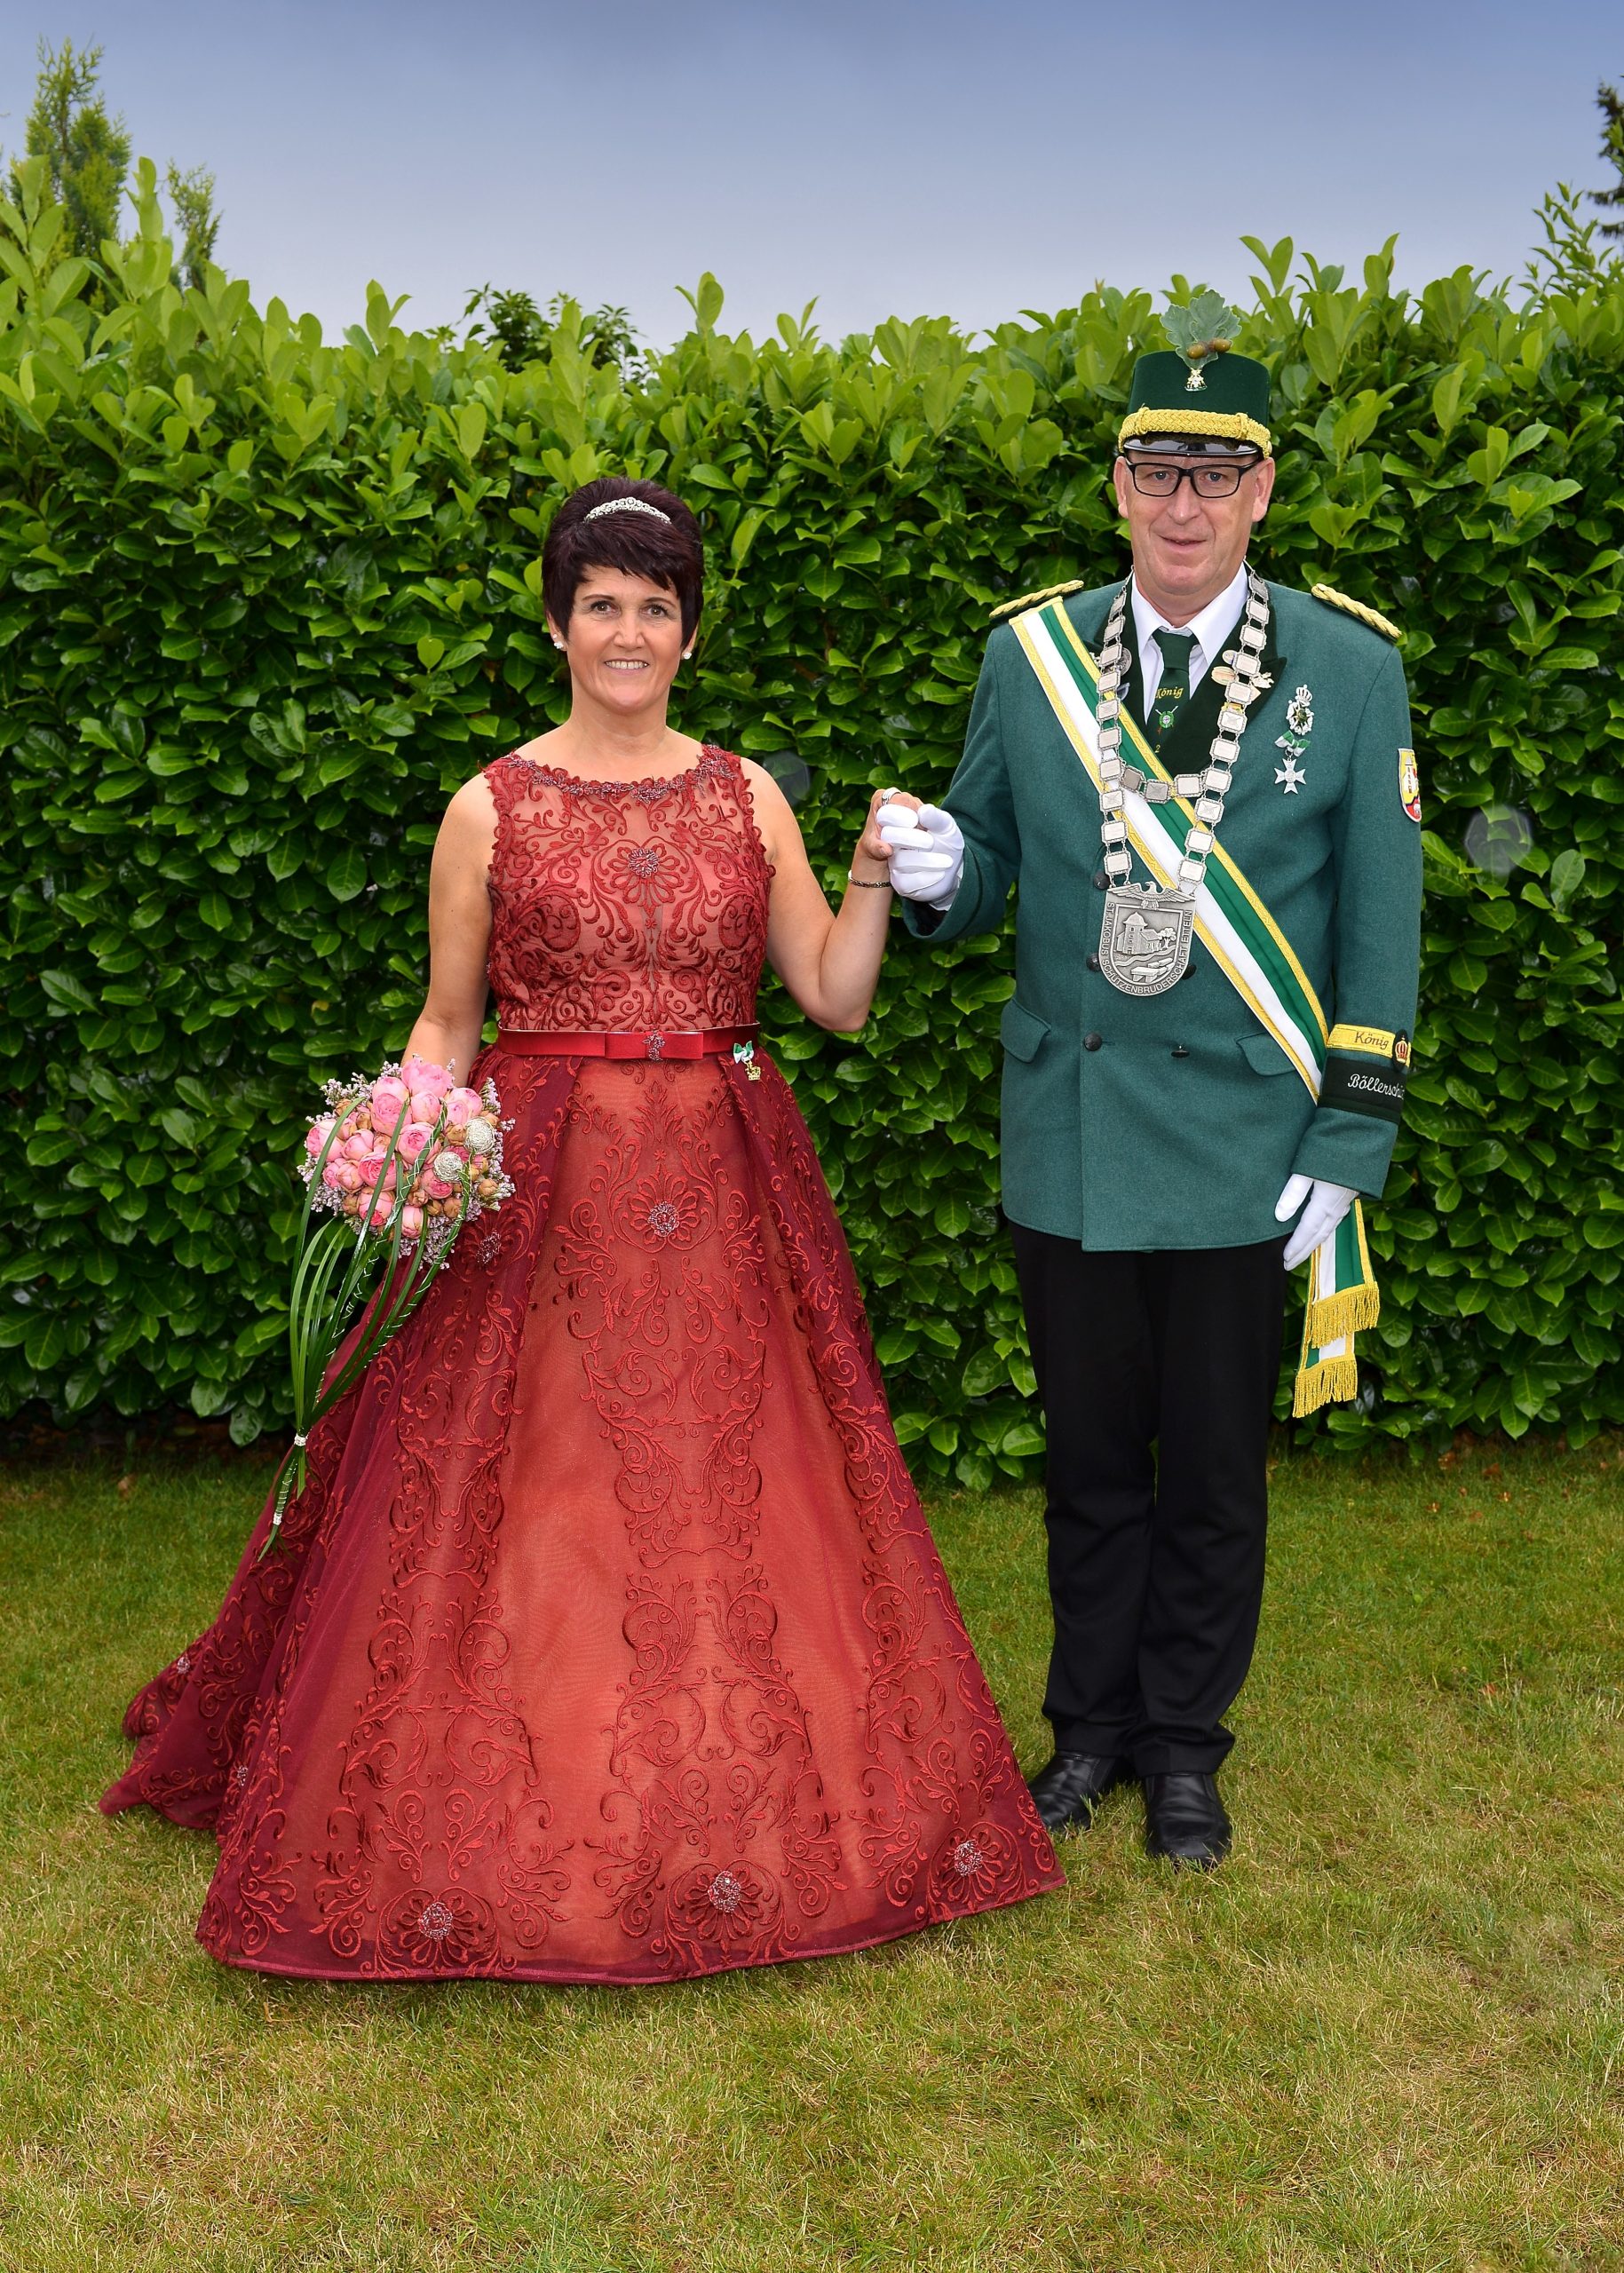 Königspaar 2019 - Ronald und Andrea Hammerschmidt